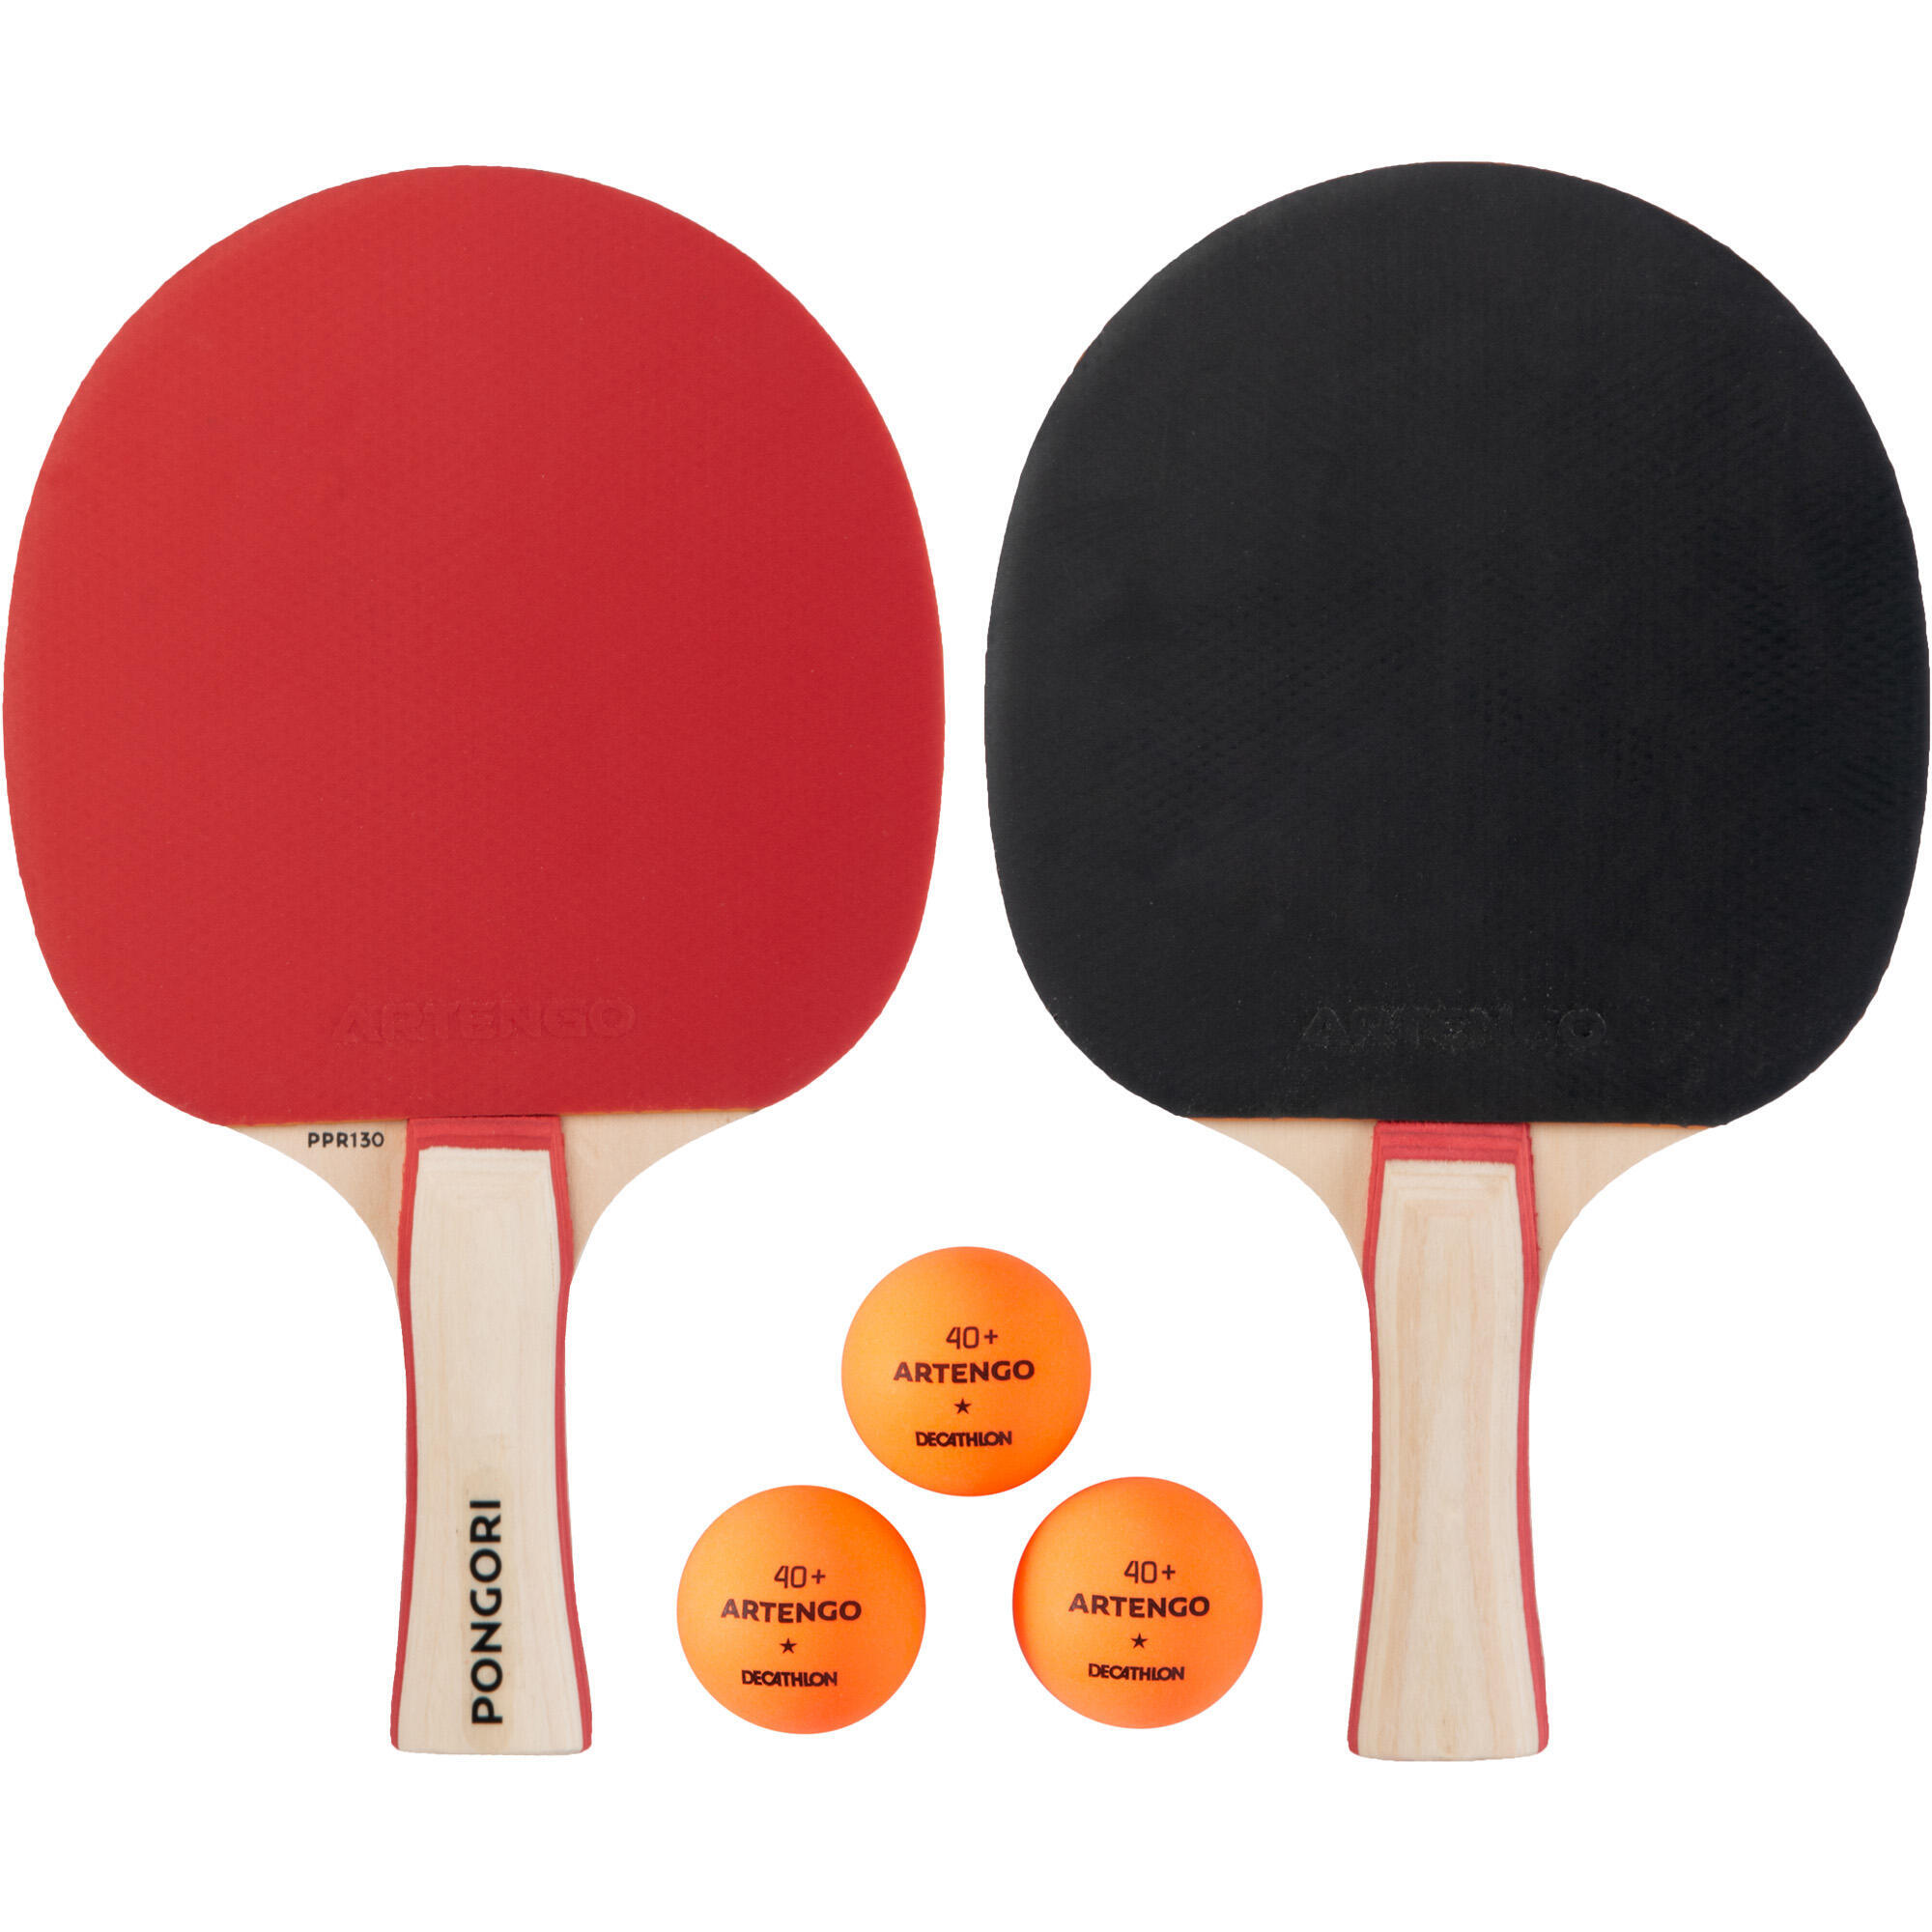 PONGORI Free Table Tennis Set: PPR 130 + 3 Balls